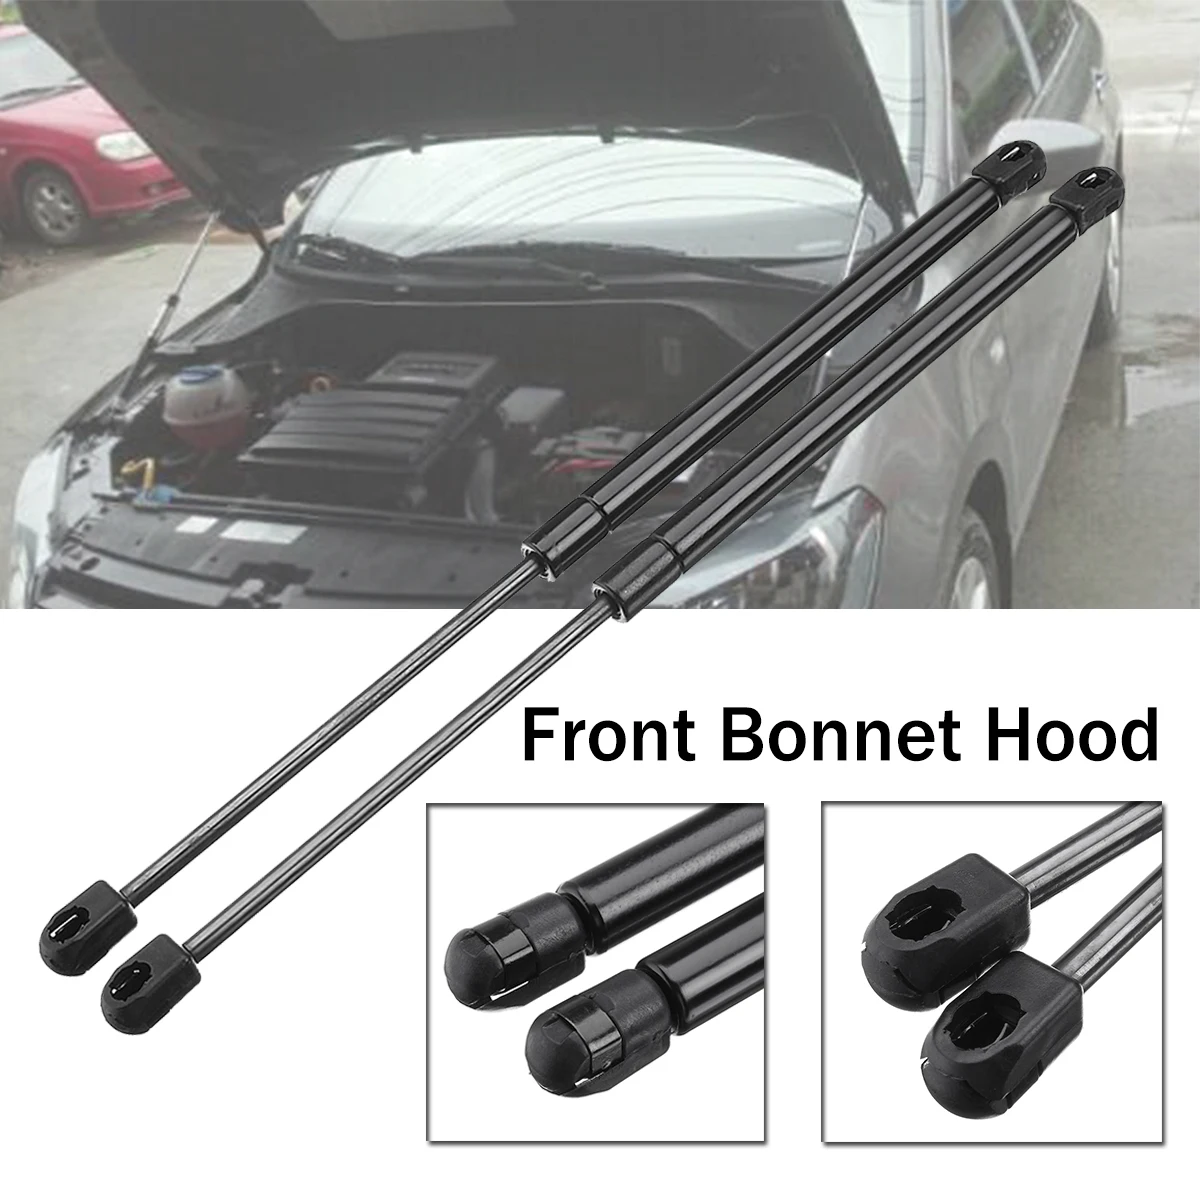 2 x Black Auto Front Bonnet Hood Gas Lift Support Shock Strut Damper Prop Rop Lifter Arm for Jeep Cherokee KJ 2001-2007